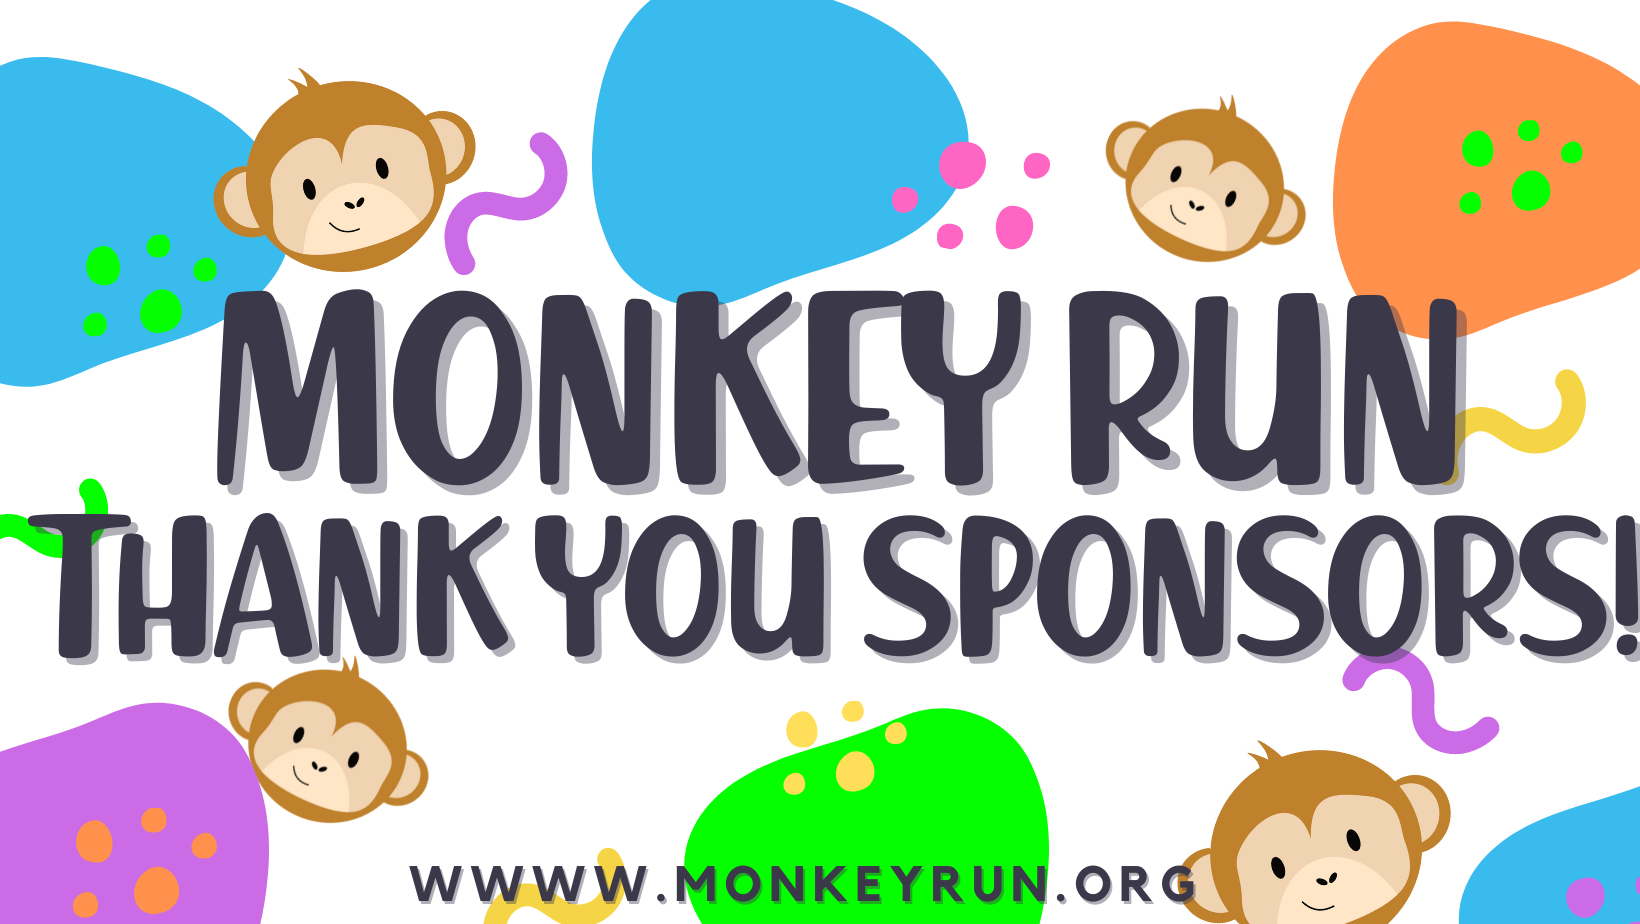 Monkey Run Sponsors